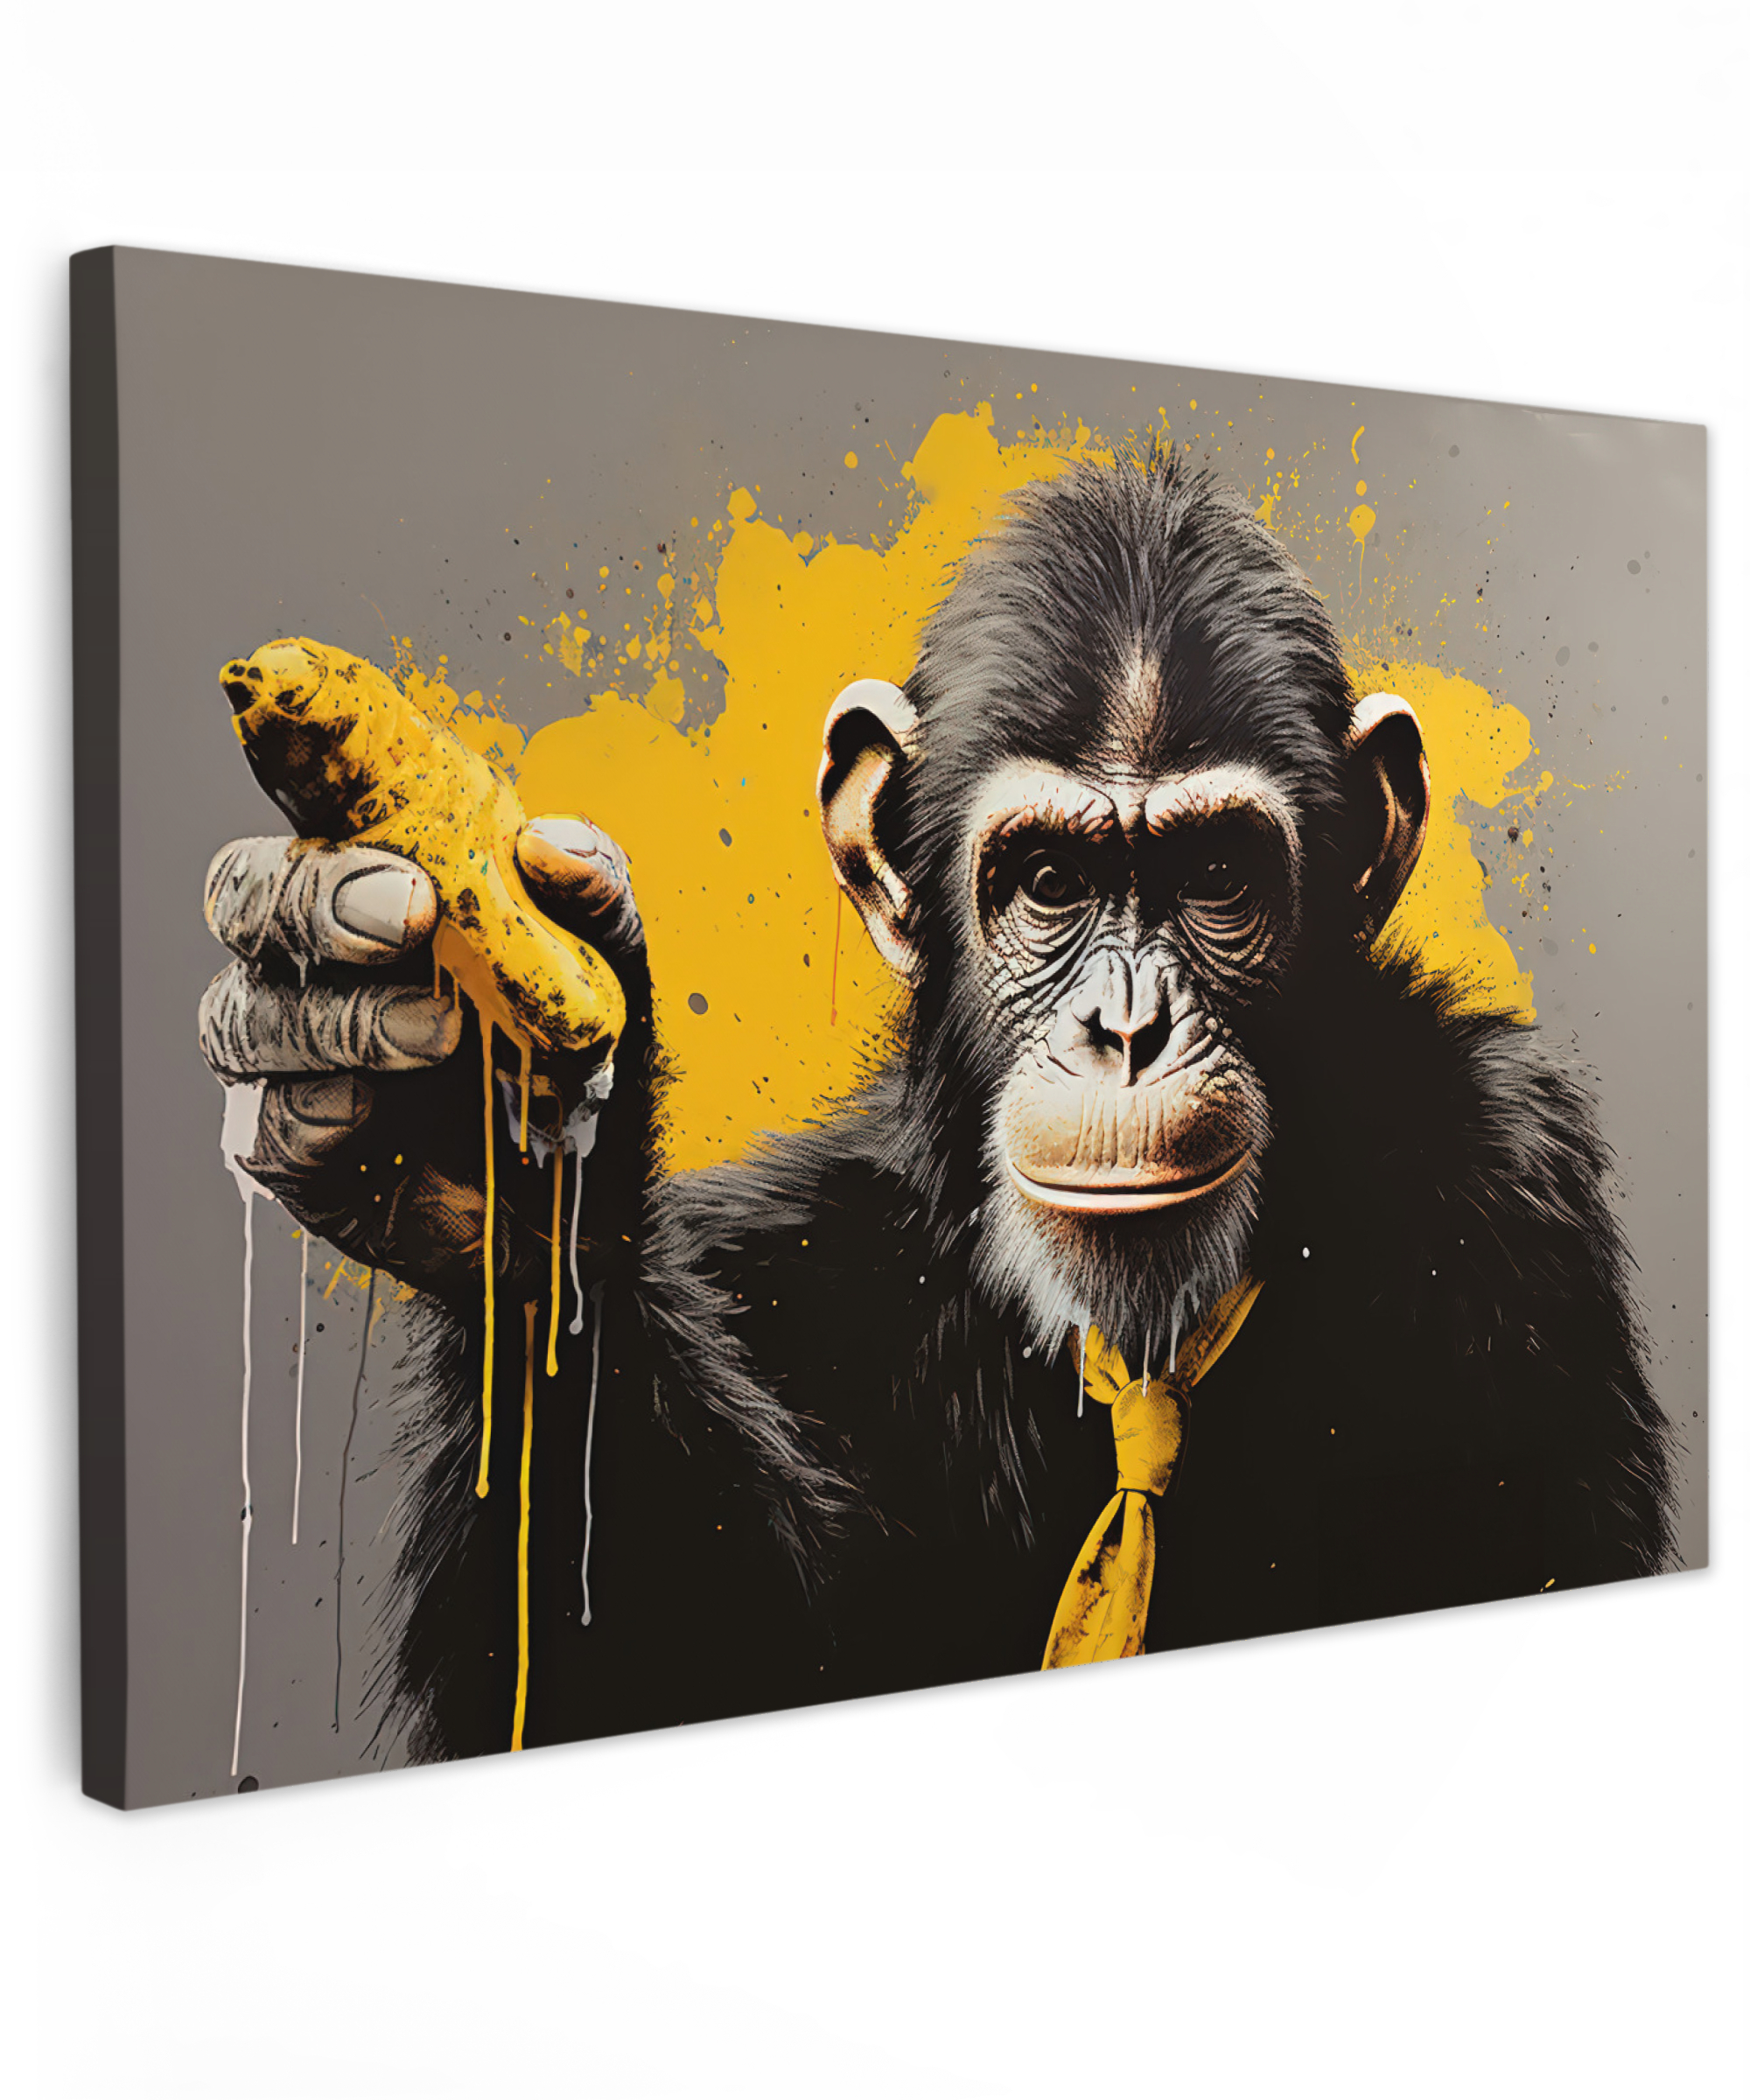 Leinwandbild - Affe - Schimpanse - Banane - Gelb - Tiere - Krawatte